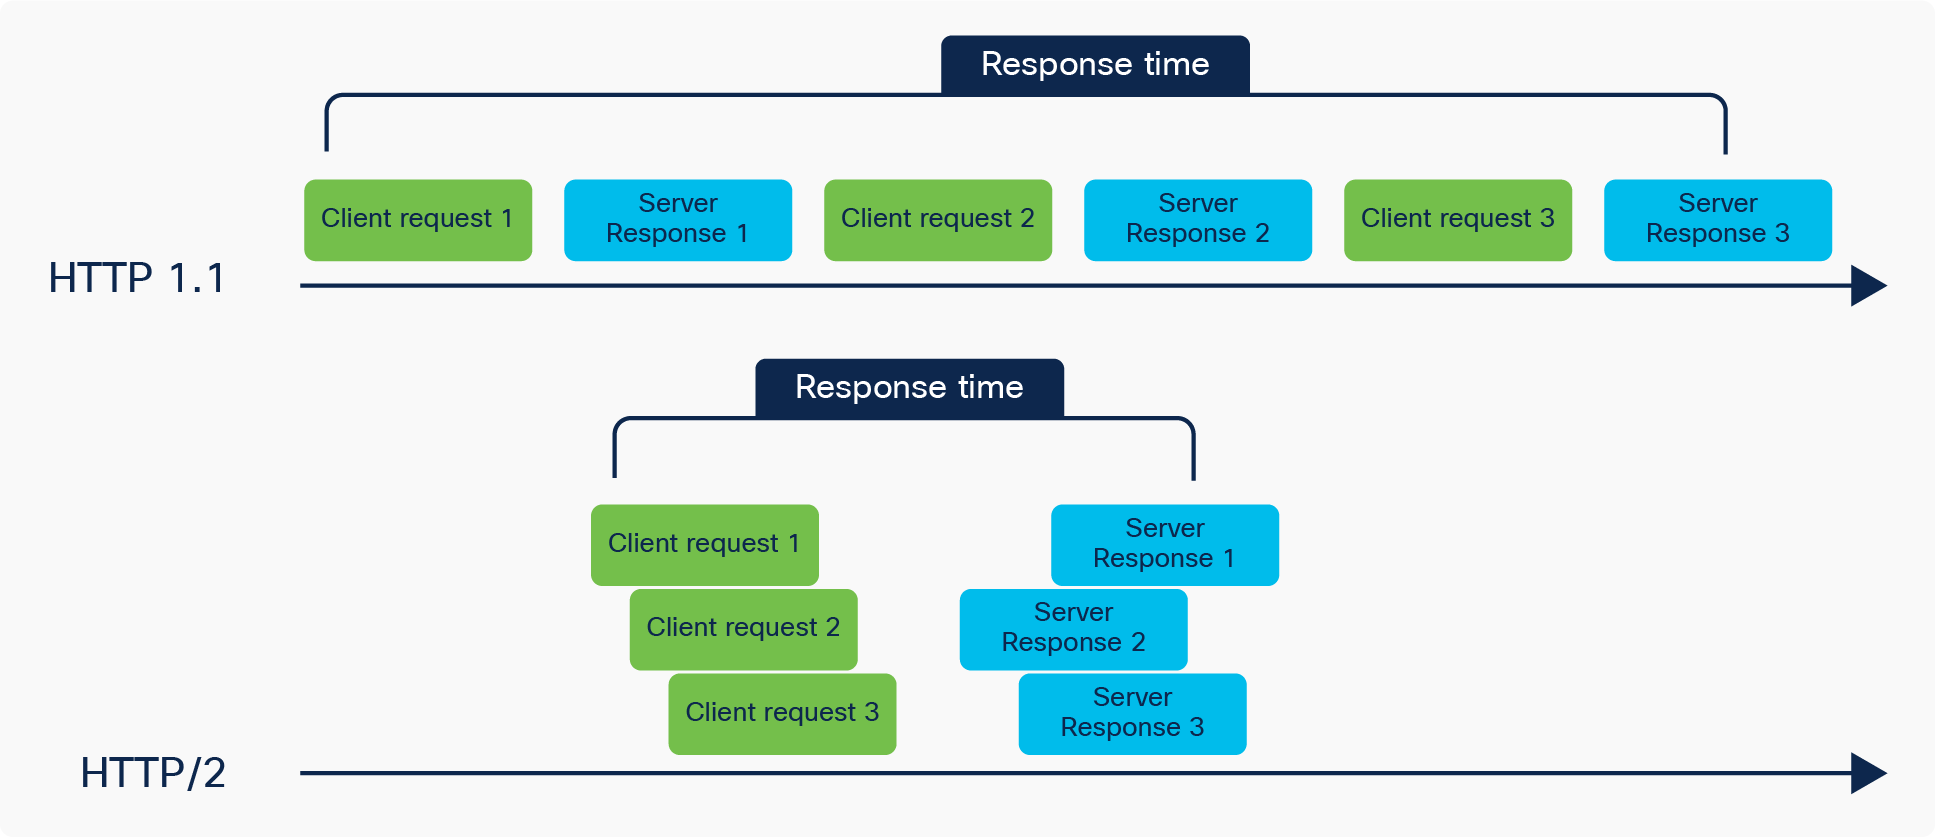 HTTP/2 Response Time